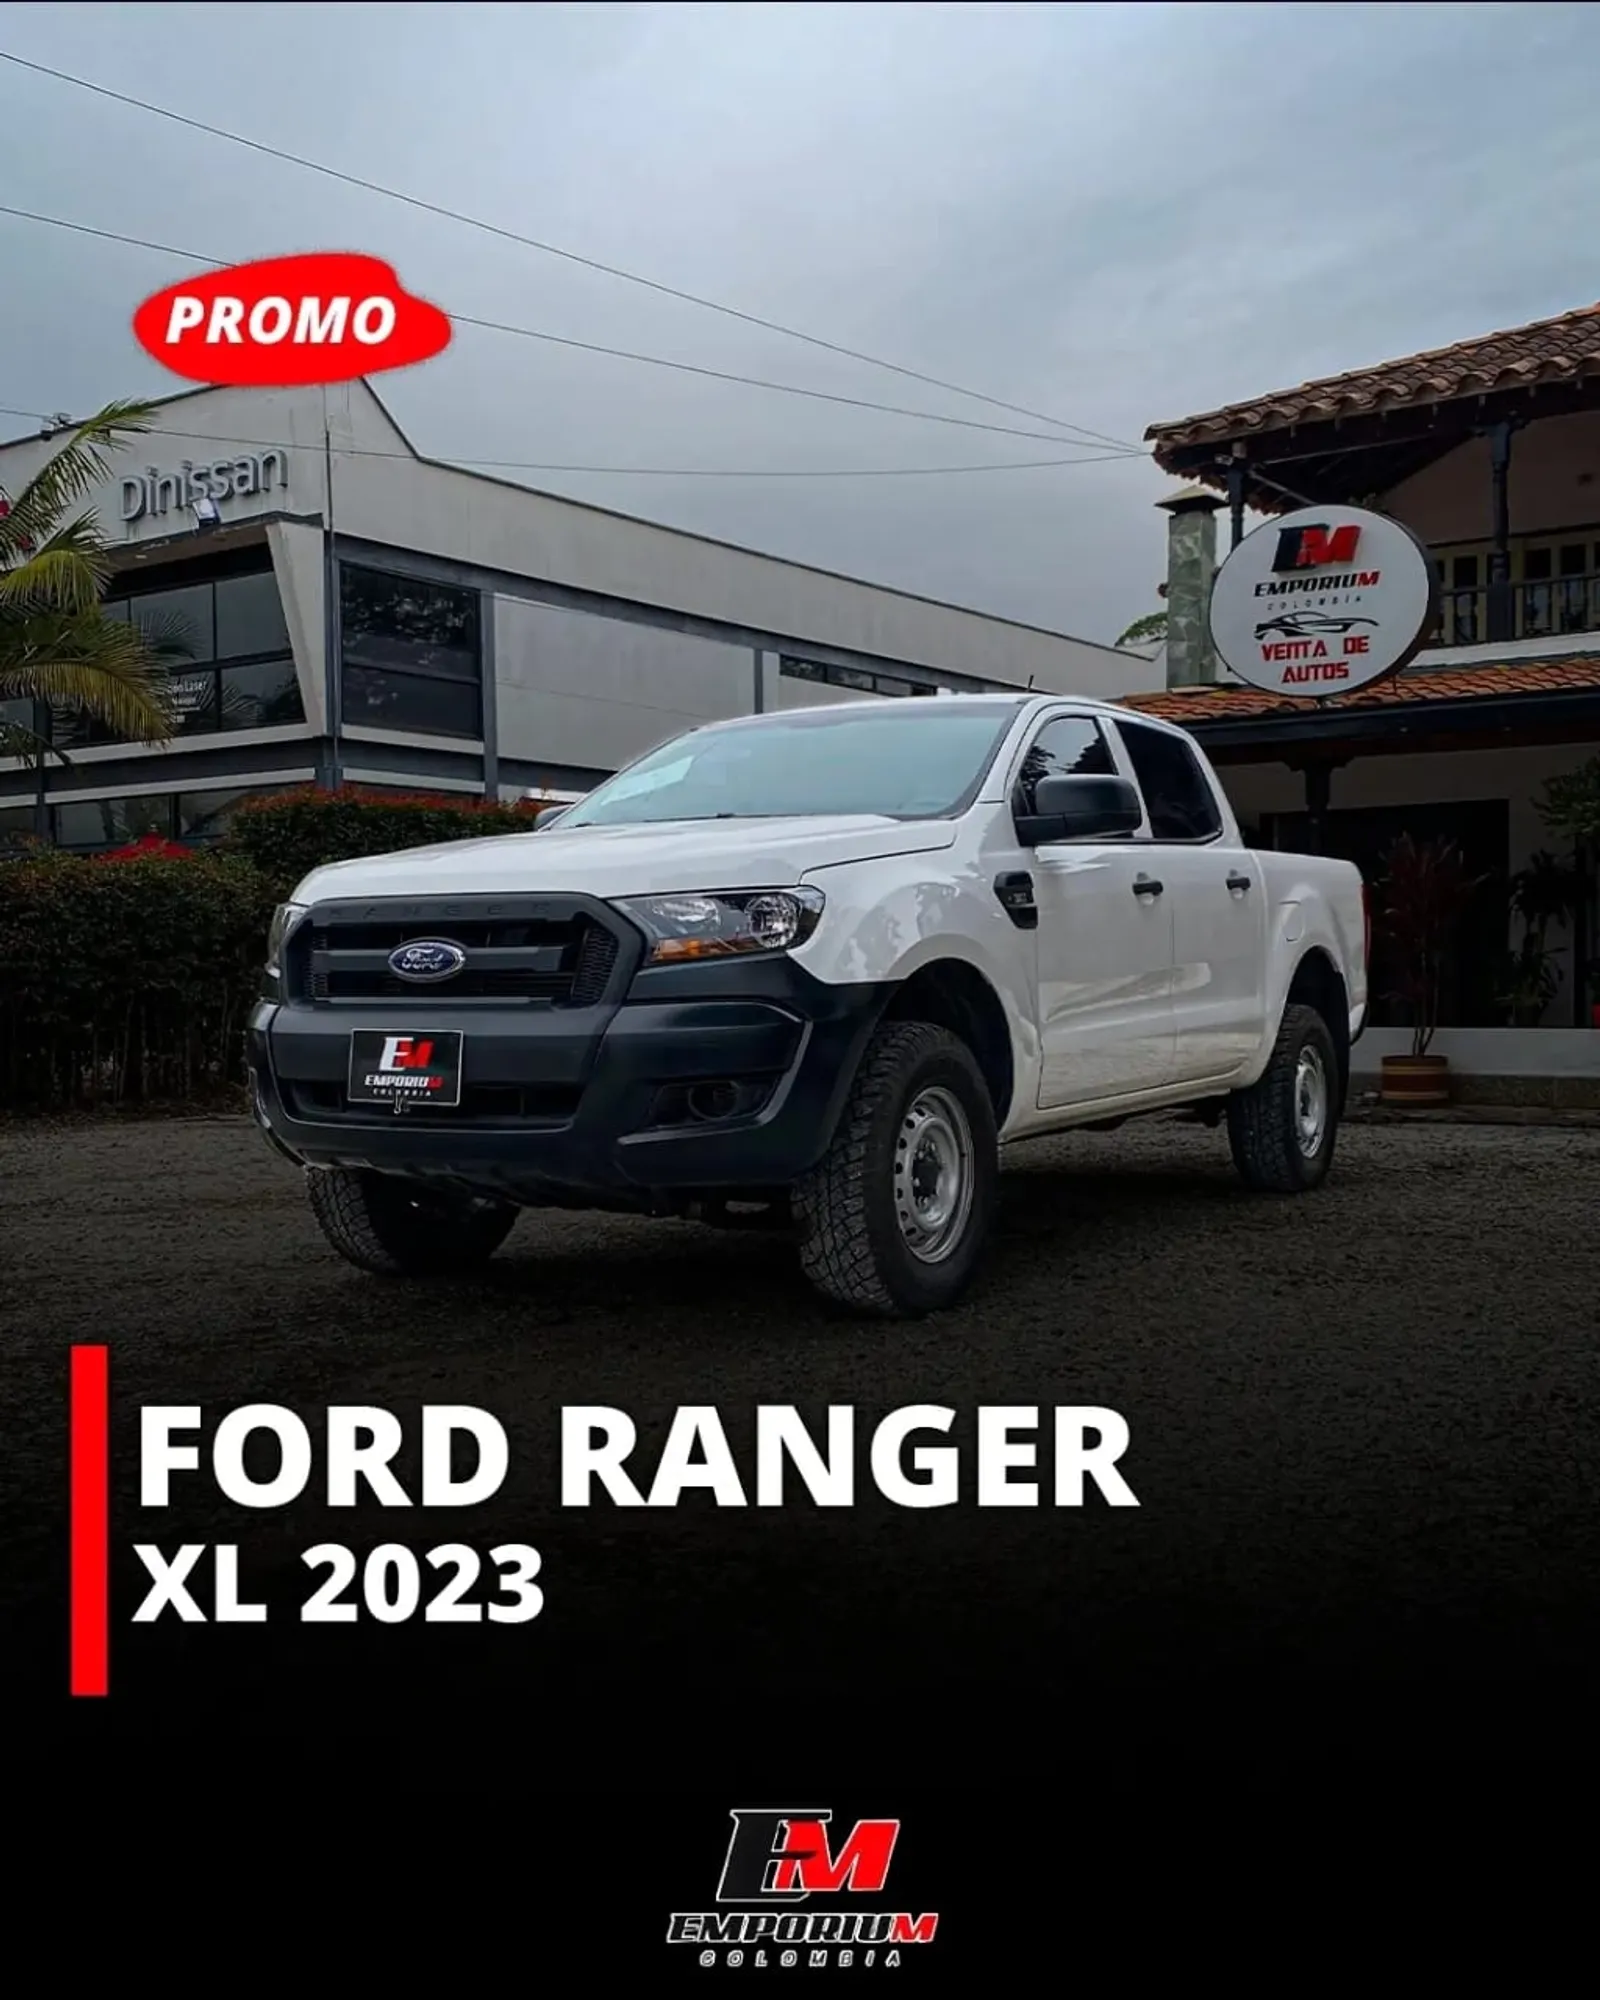 Ford Ranger Xl 2023